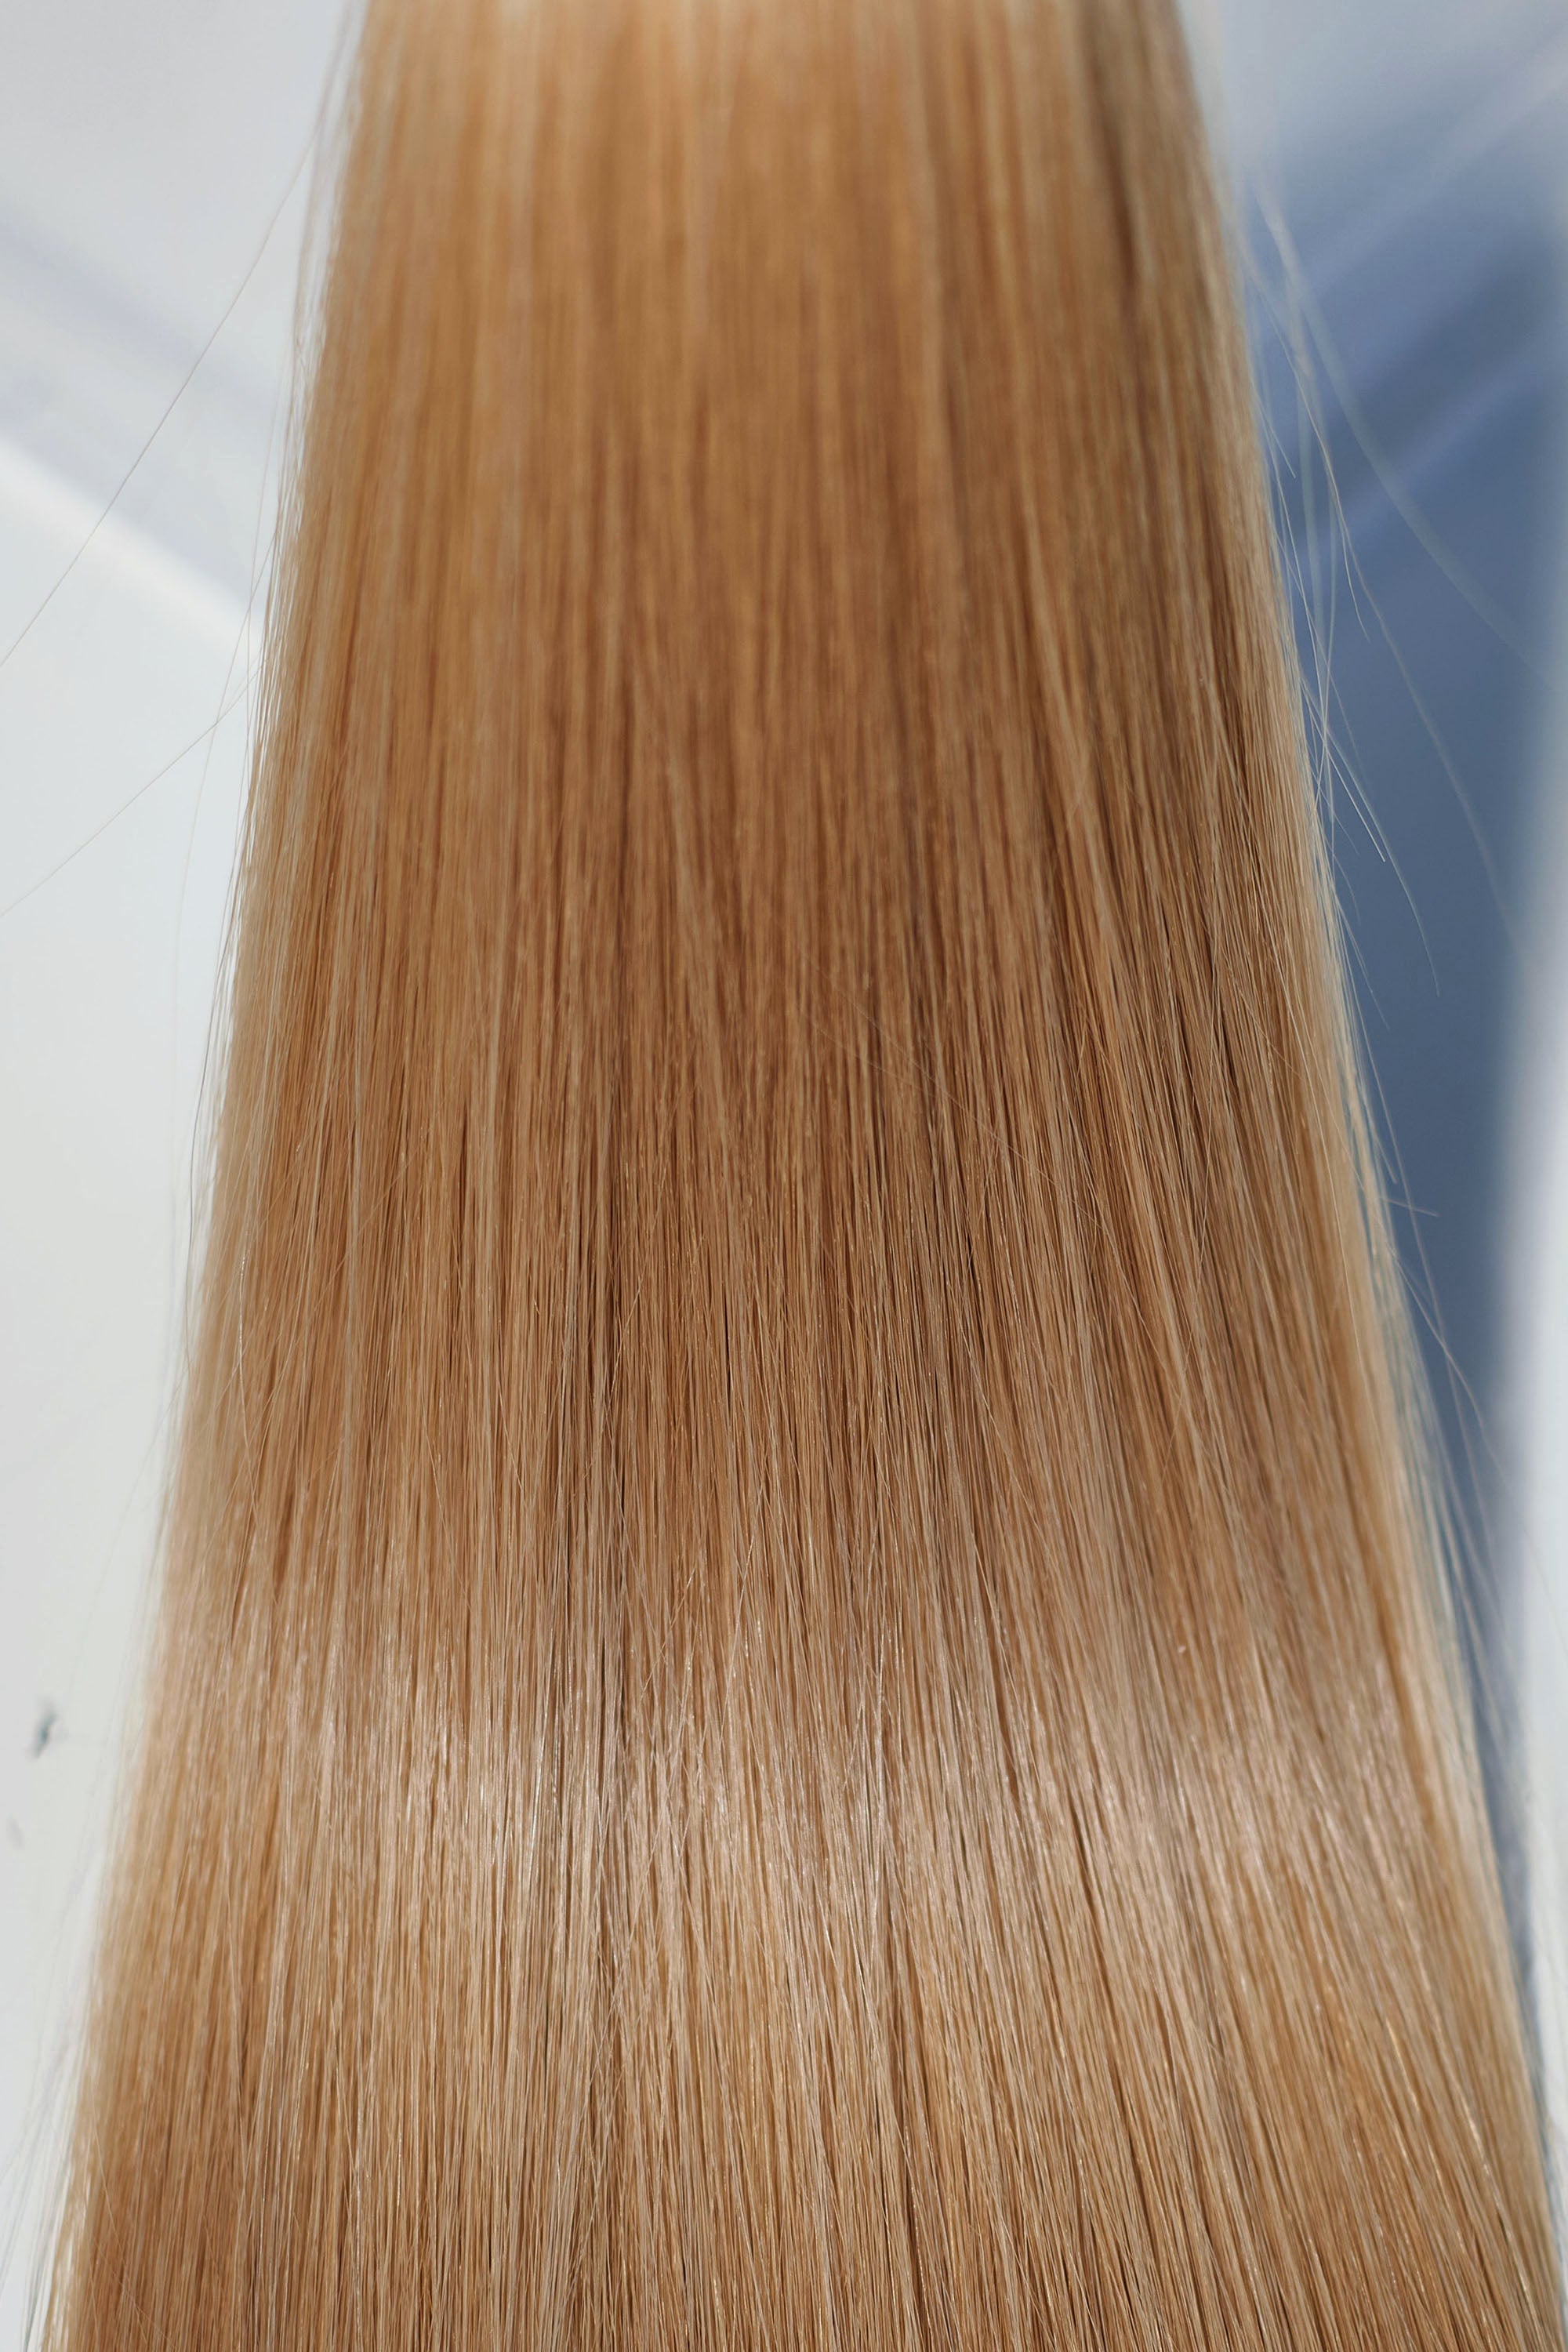 Behair professional Keratin Tip "Premium" 26" (65cm) Natural Straight Gold Sand #18 - 25g (1g each pcs) hair extensions